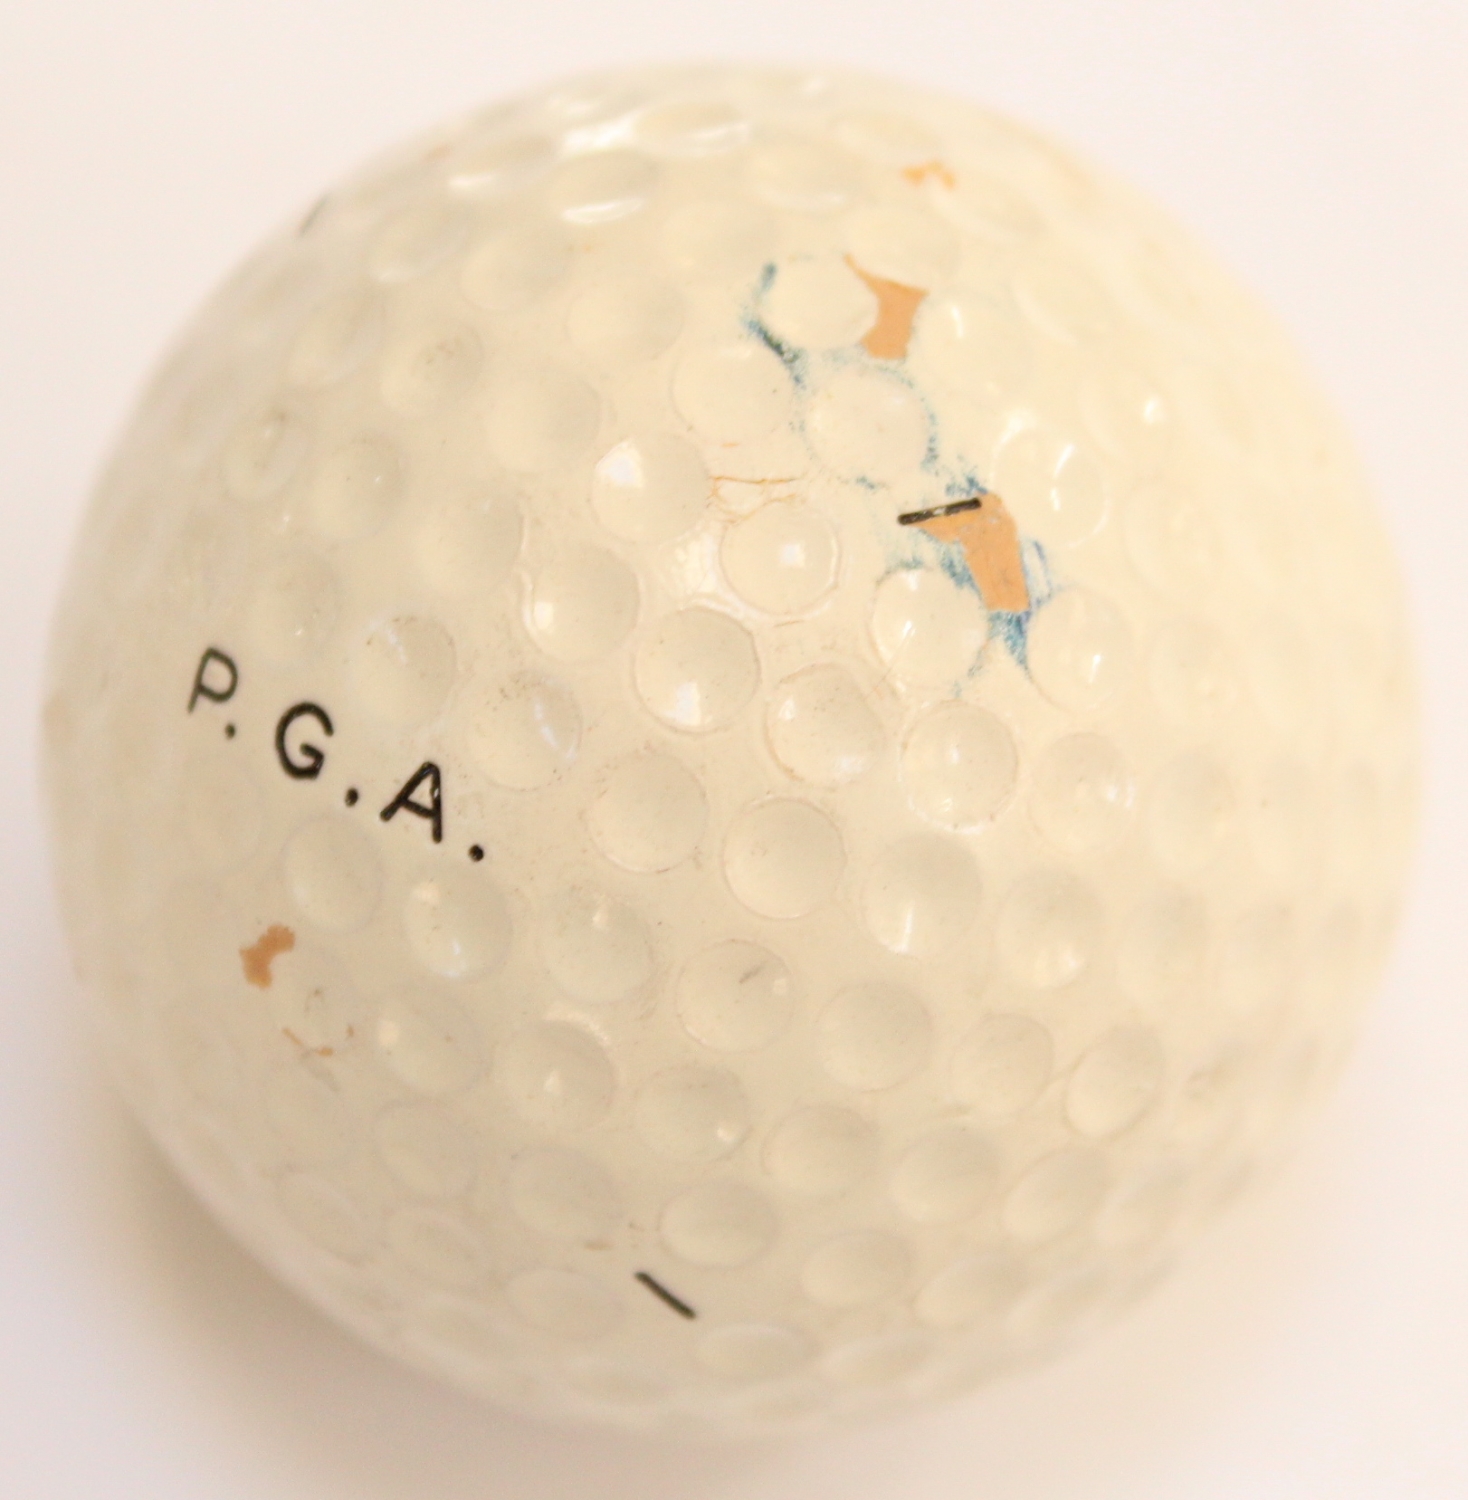 A PGA Bromford 18 vintage golf ball